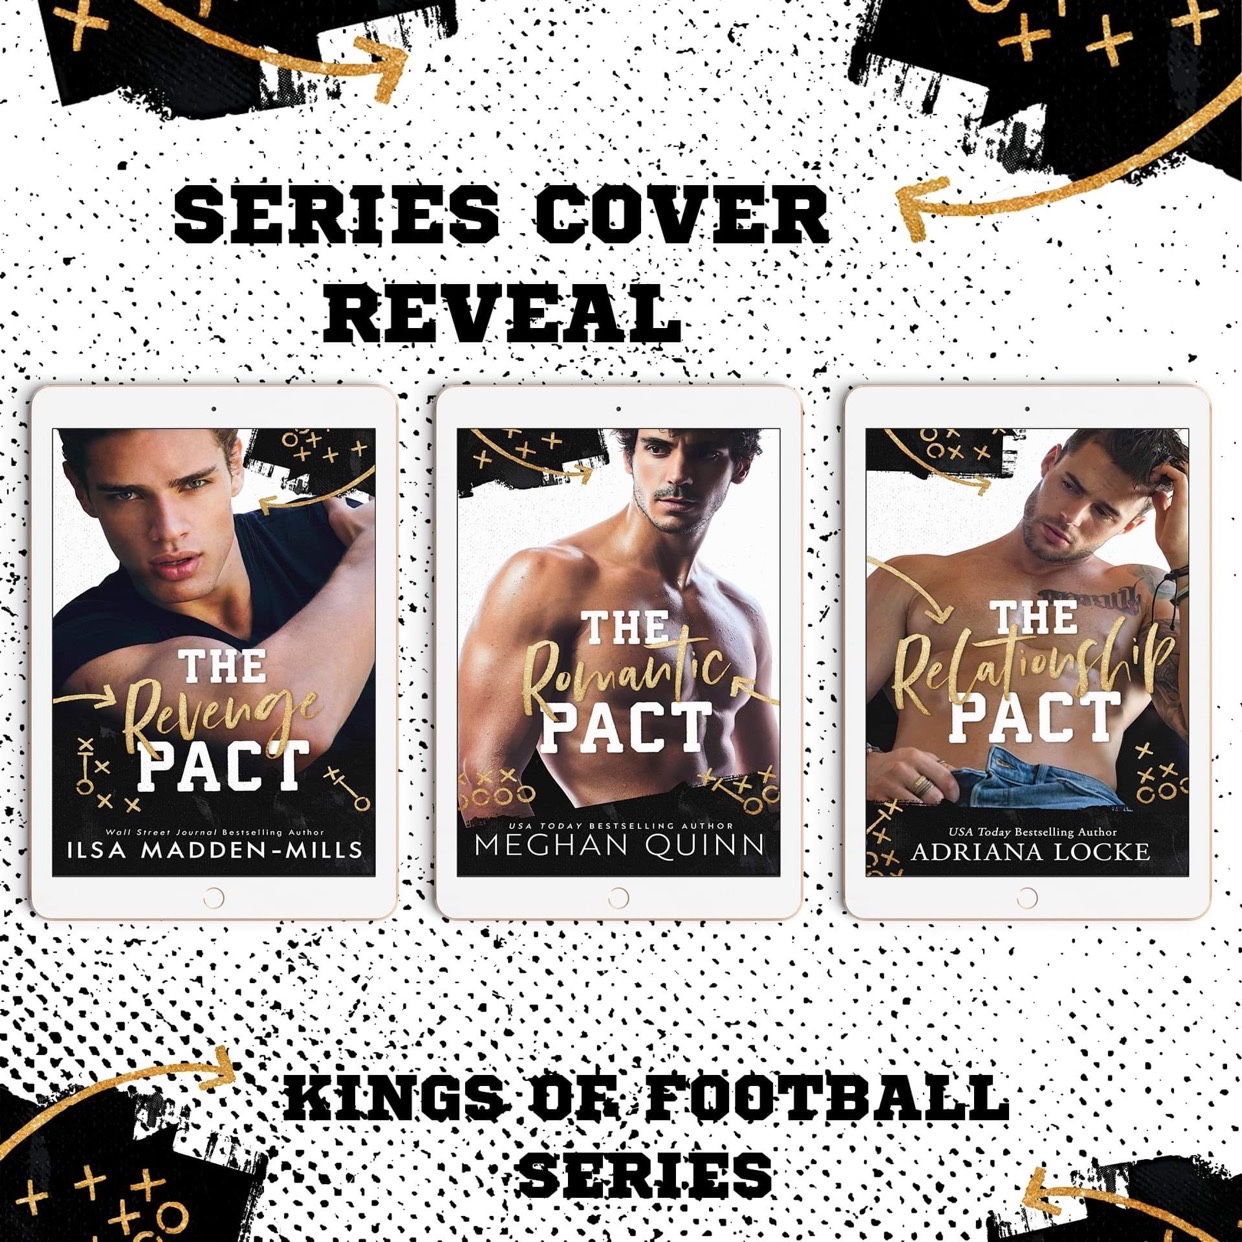 Kings of Football Series by #IlsaMaddenMills, #MeghanQuinn & #AdrianaLocke [Cover Reveal]